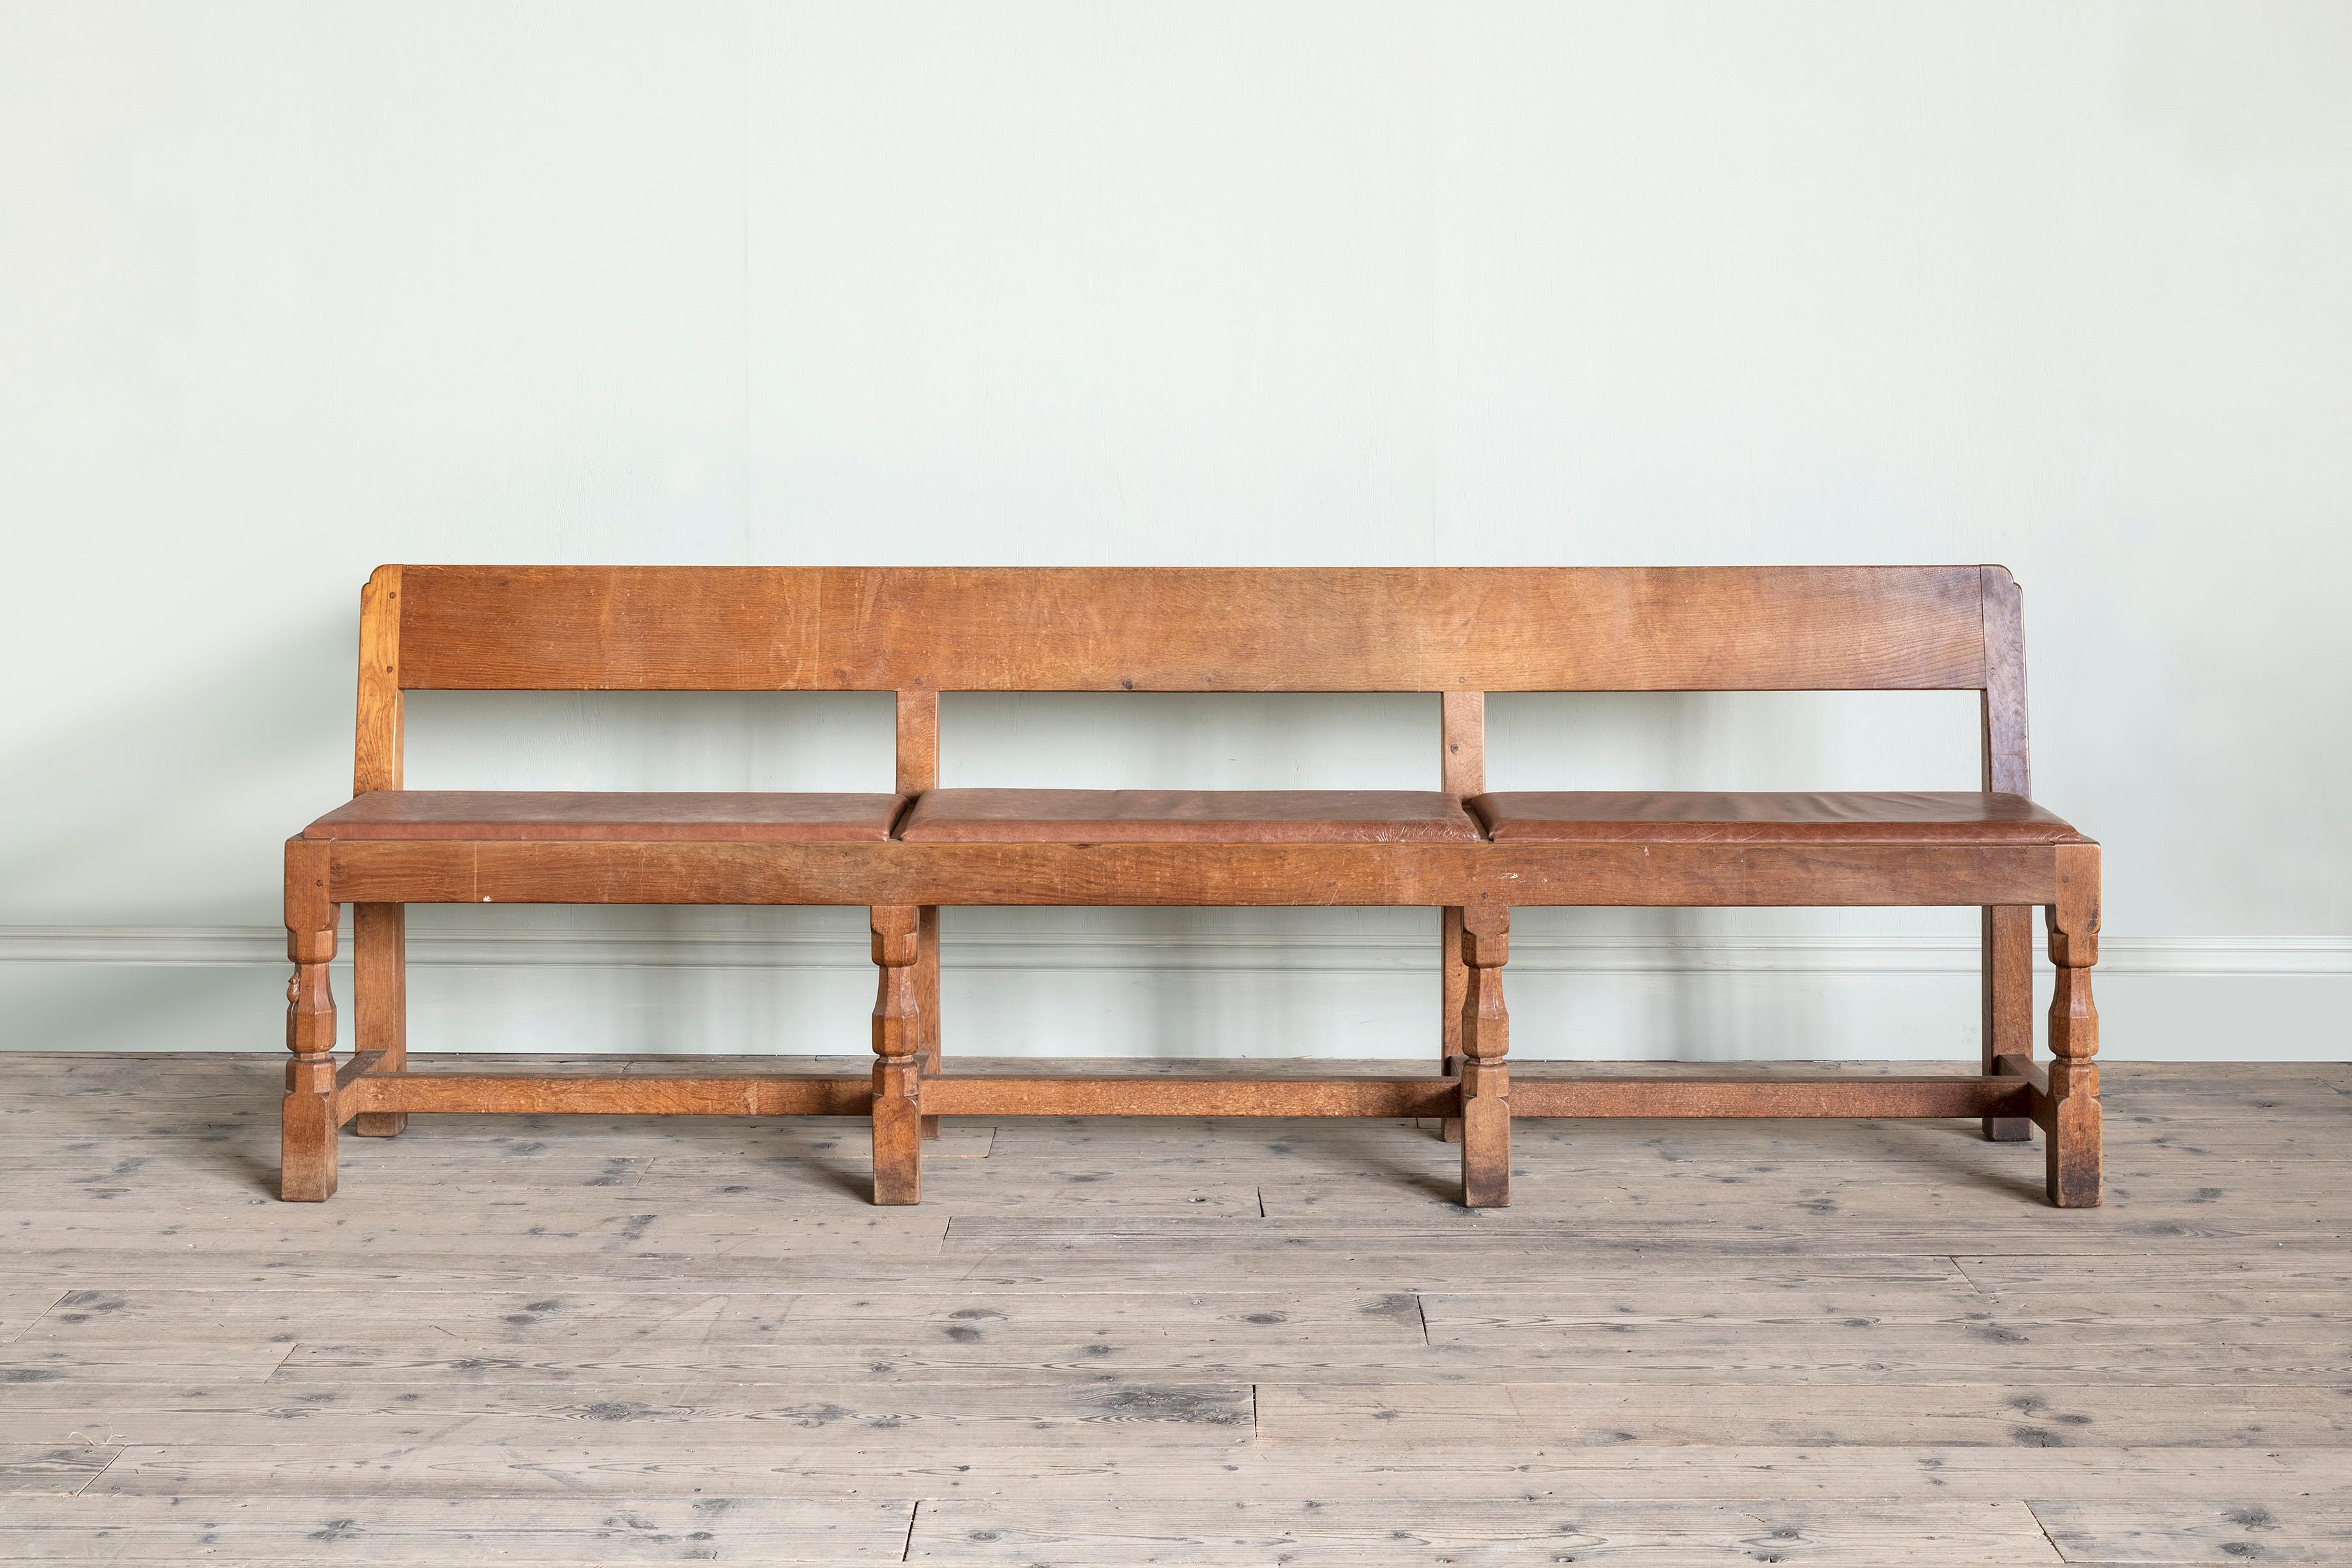 A pair of Robert ‘Mouseman’ Thompson (1876-1955) benches, Provenance: Ston Easton Park, Somerset.